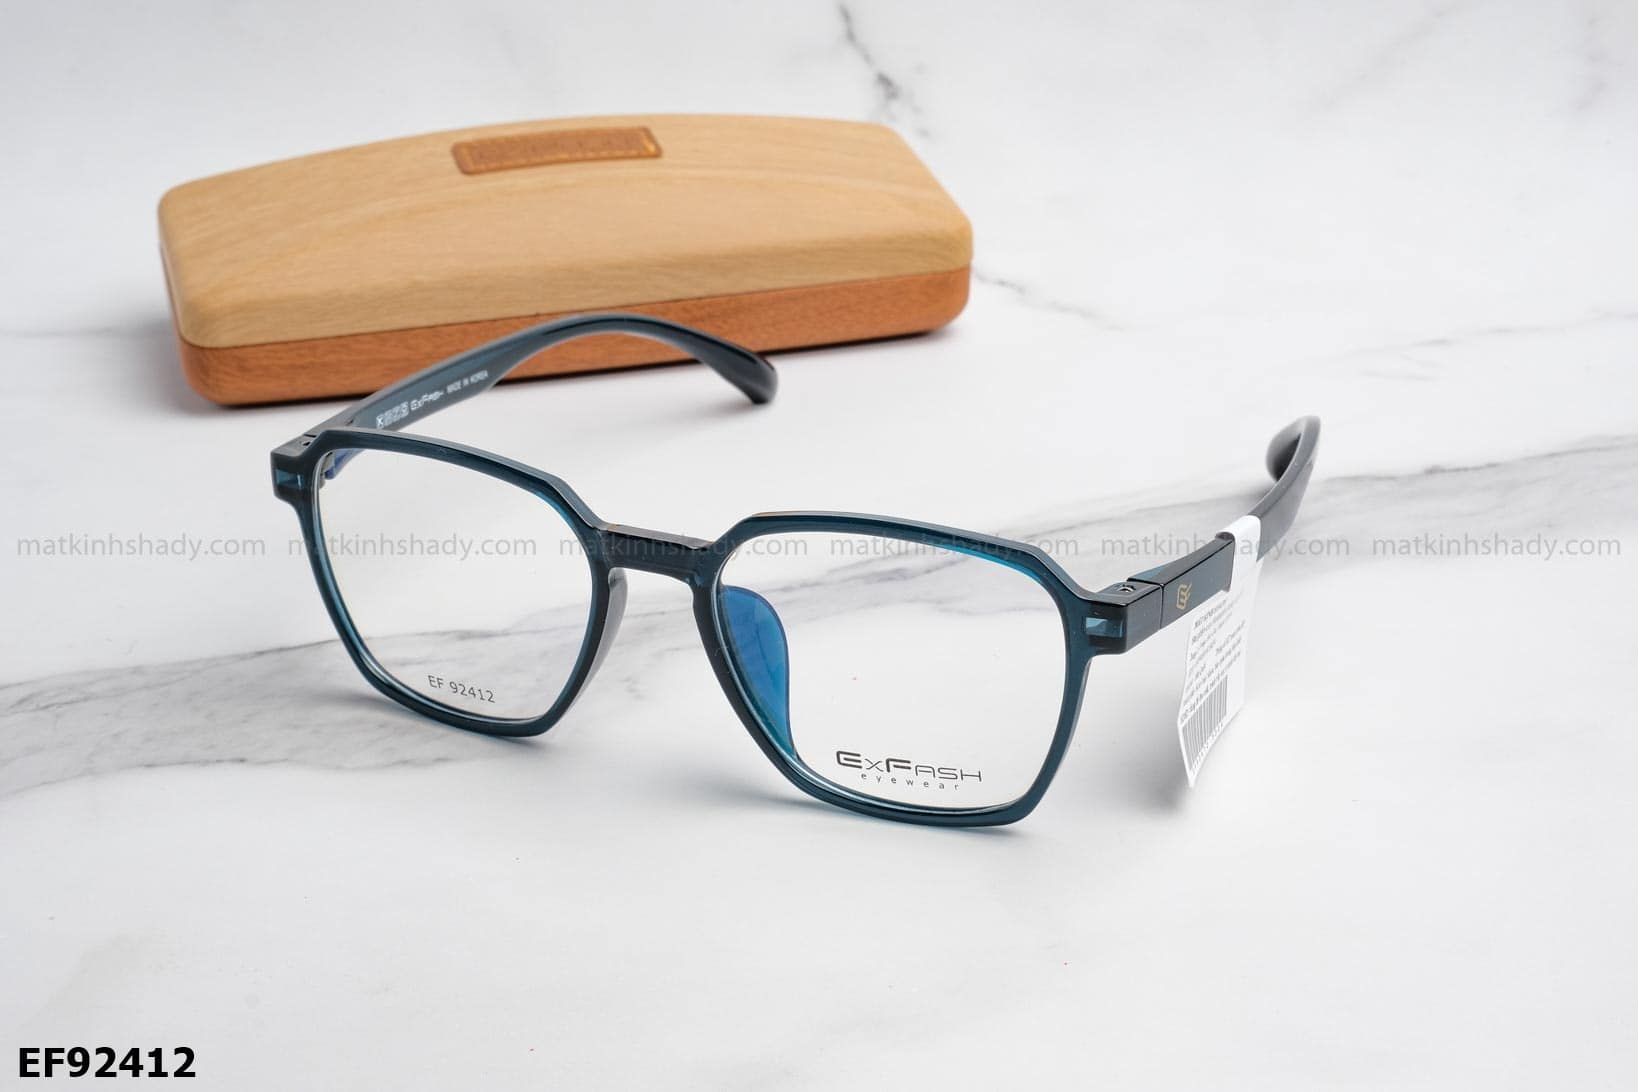  Exfash Eyewear - Glasses - EF92412 